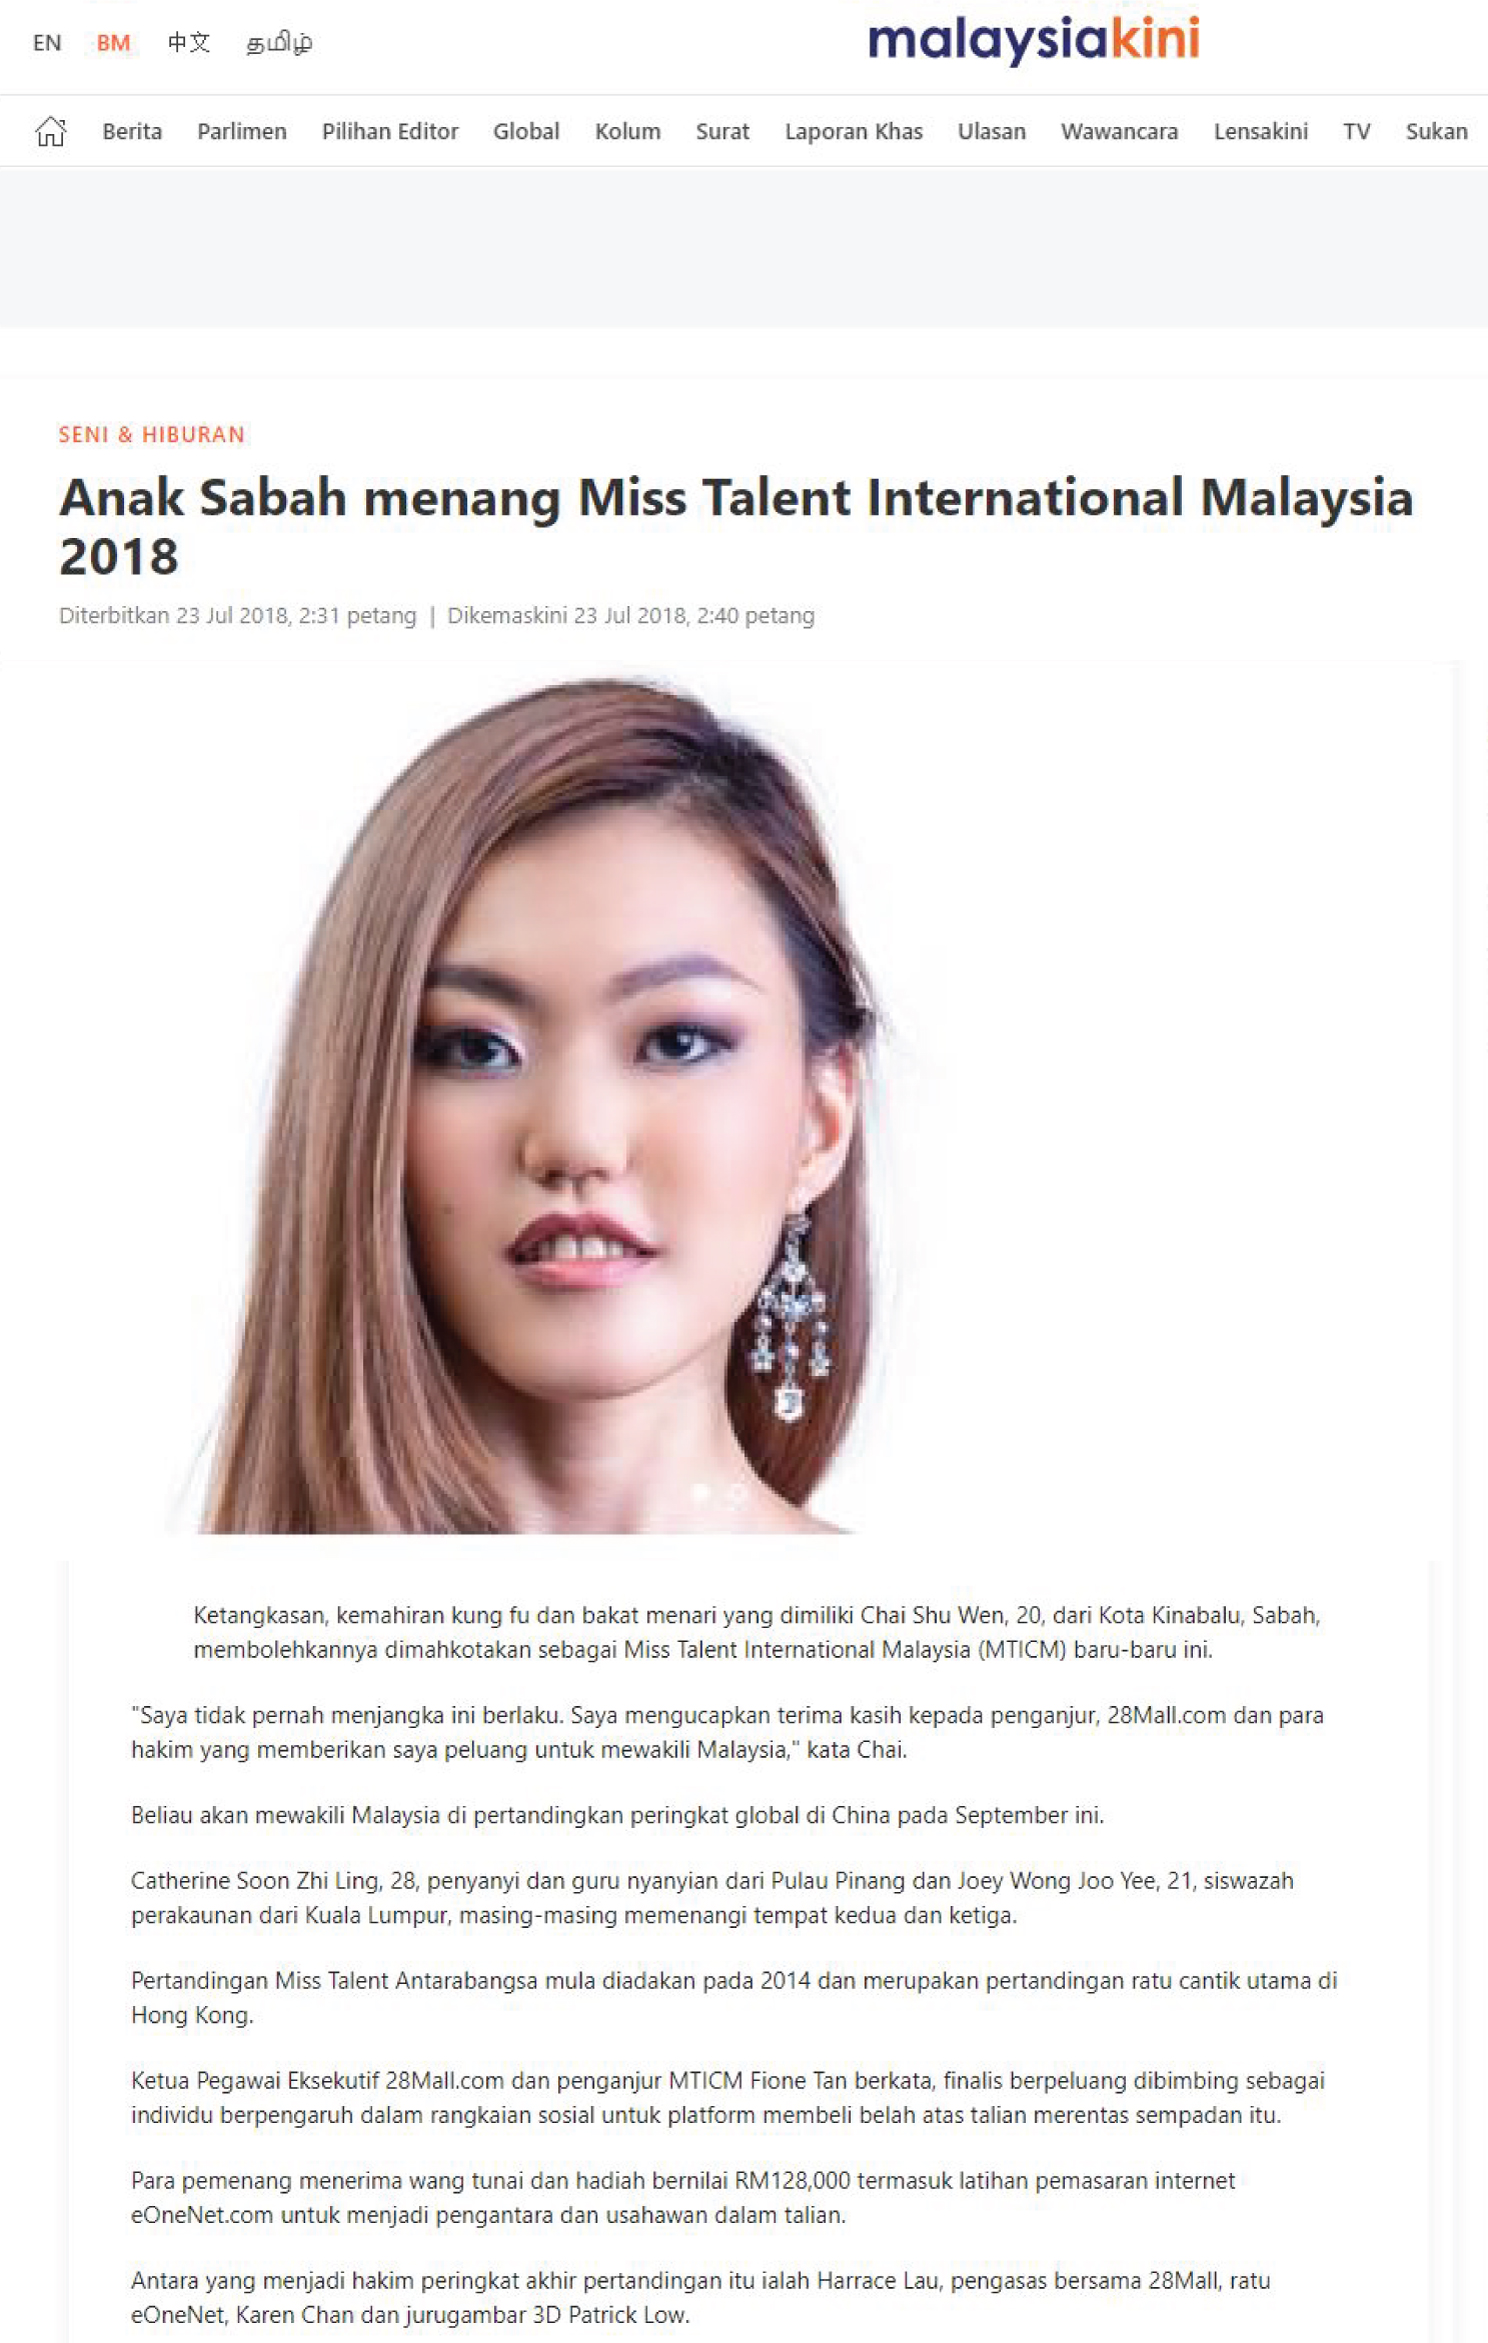 Anak Sabah menang Miss Talent International Malaysia 2018 by MalaysiaKini